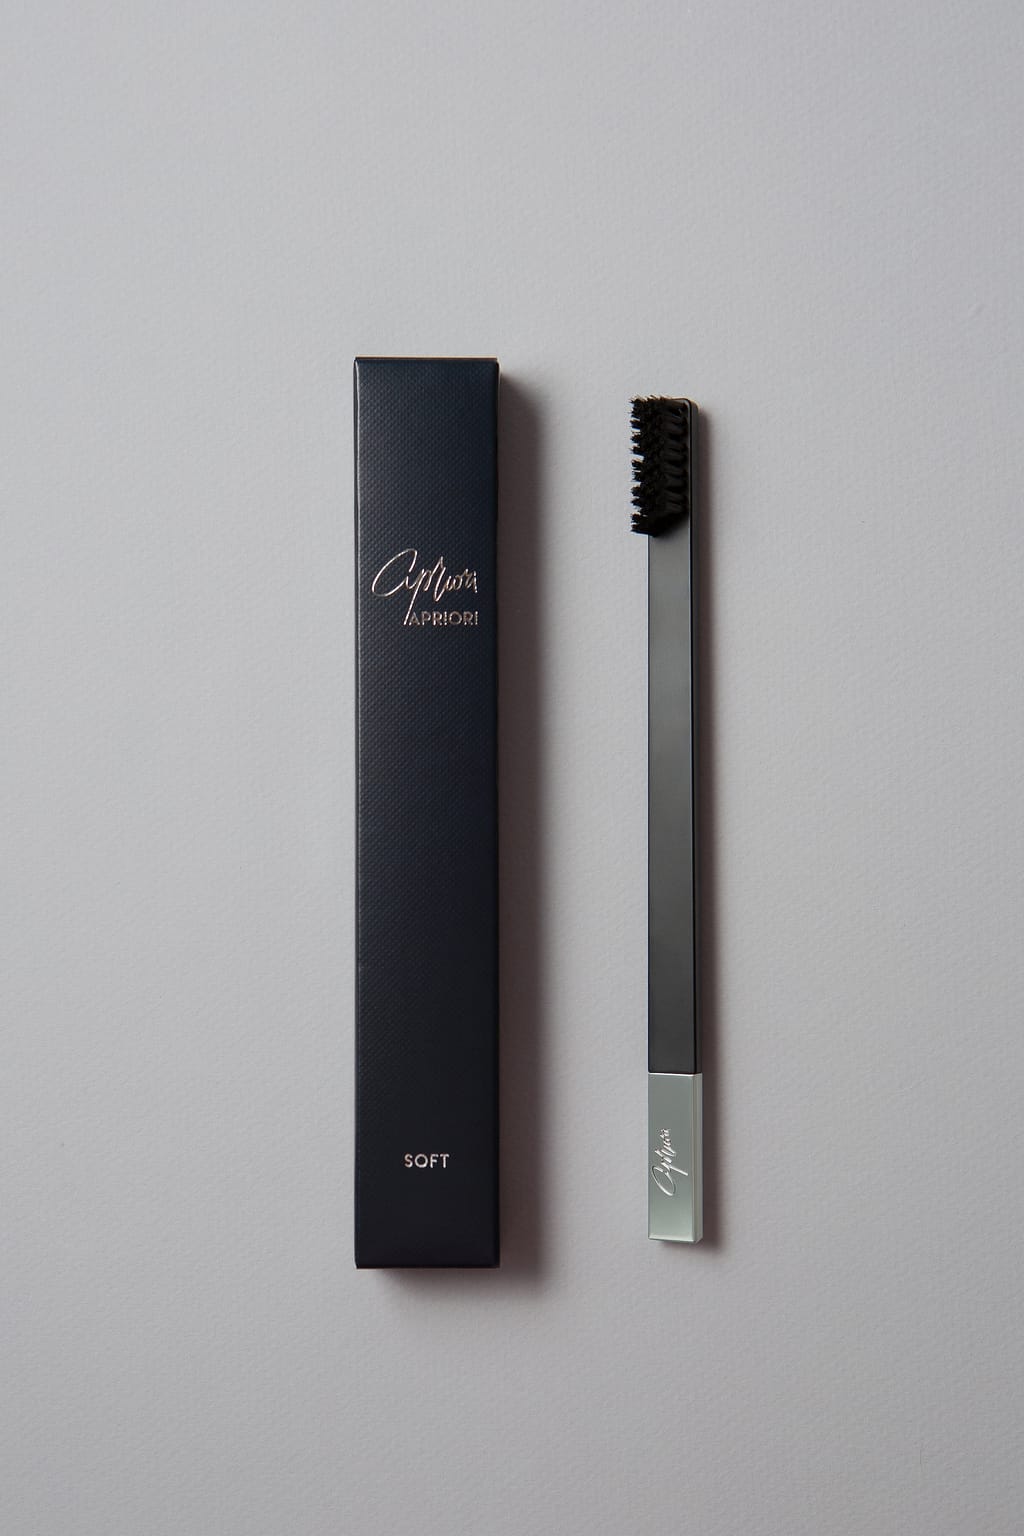 Black Silver designer toothbrush SLIM by Apriori